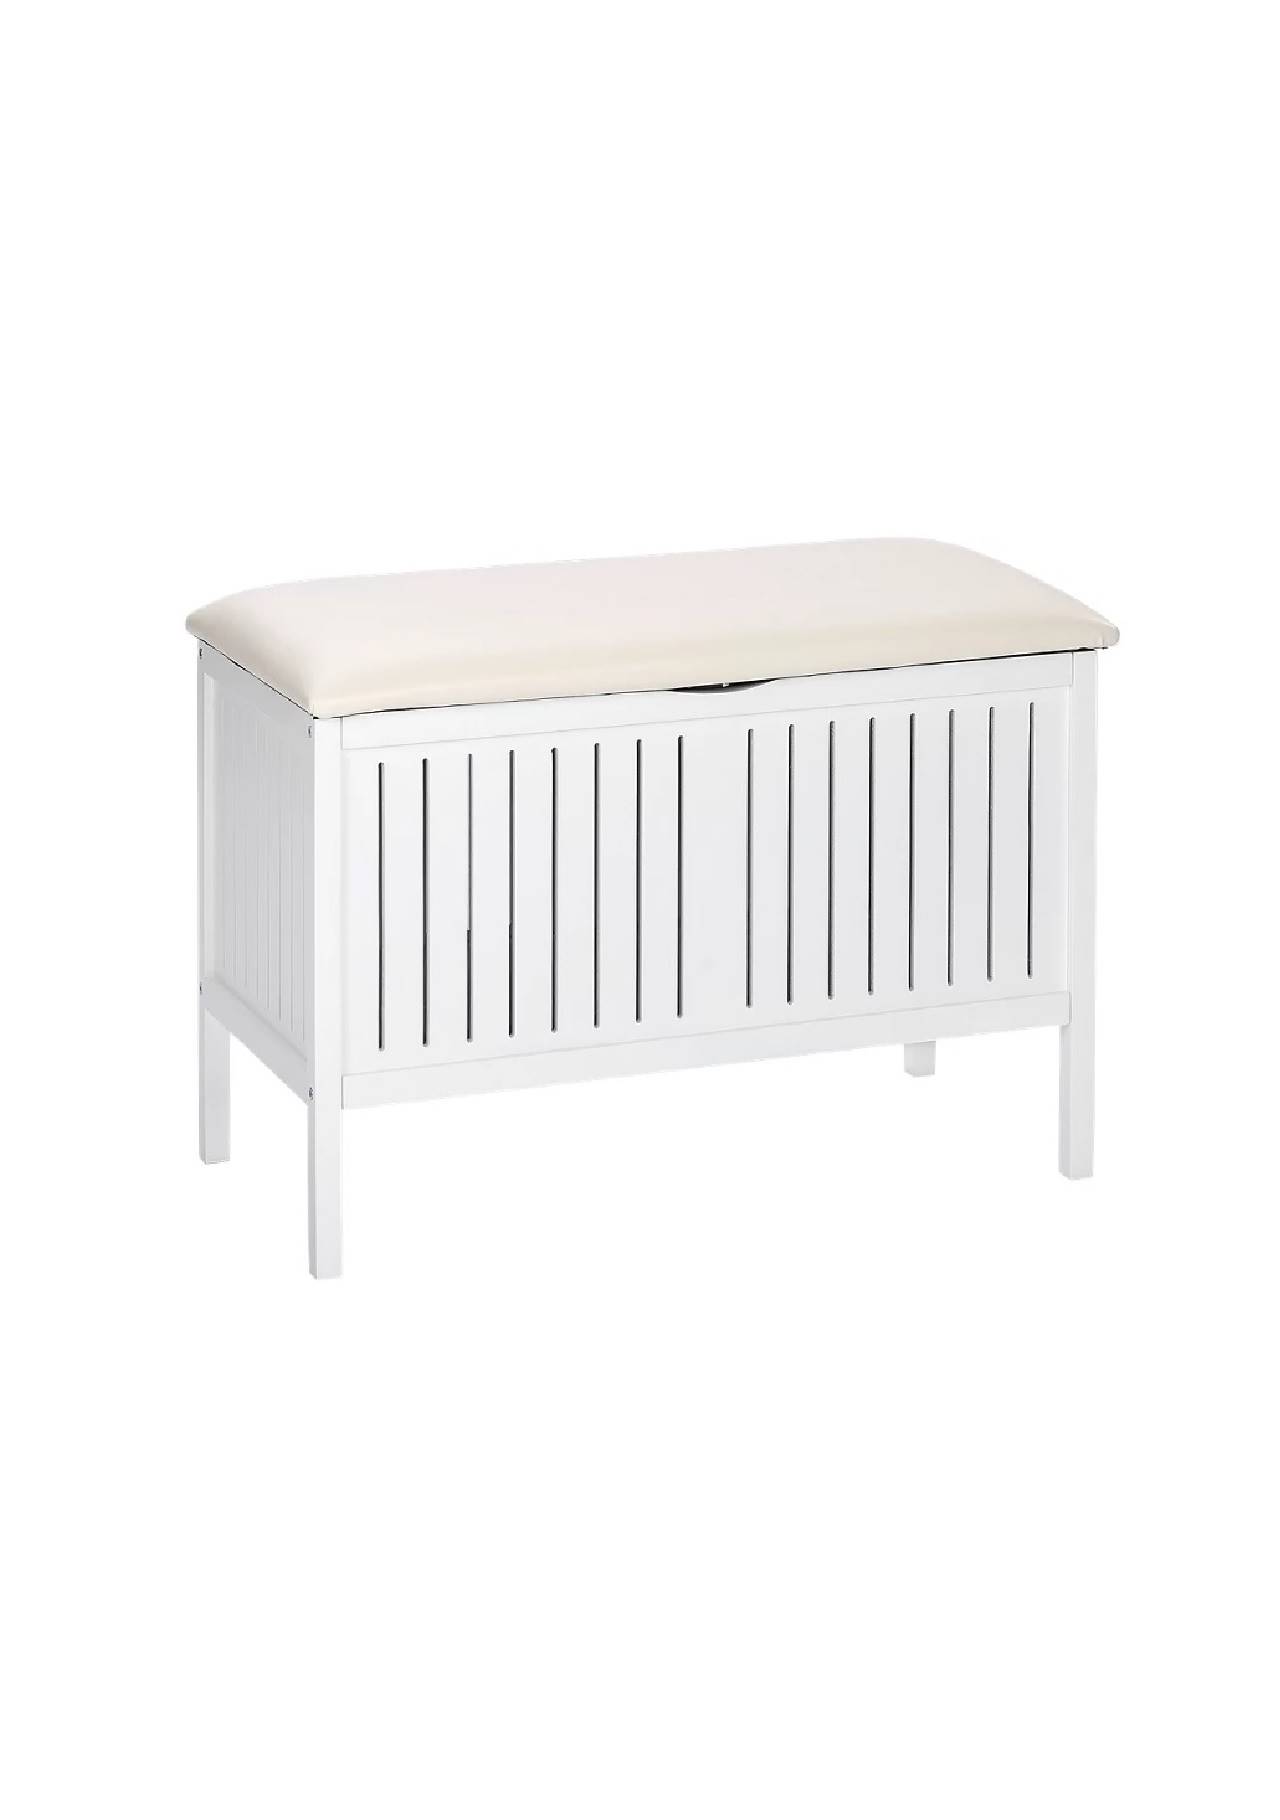 mueble de baño carrito de baño en color blanco Leroy Merlín, 111,00€